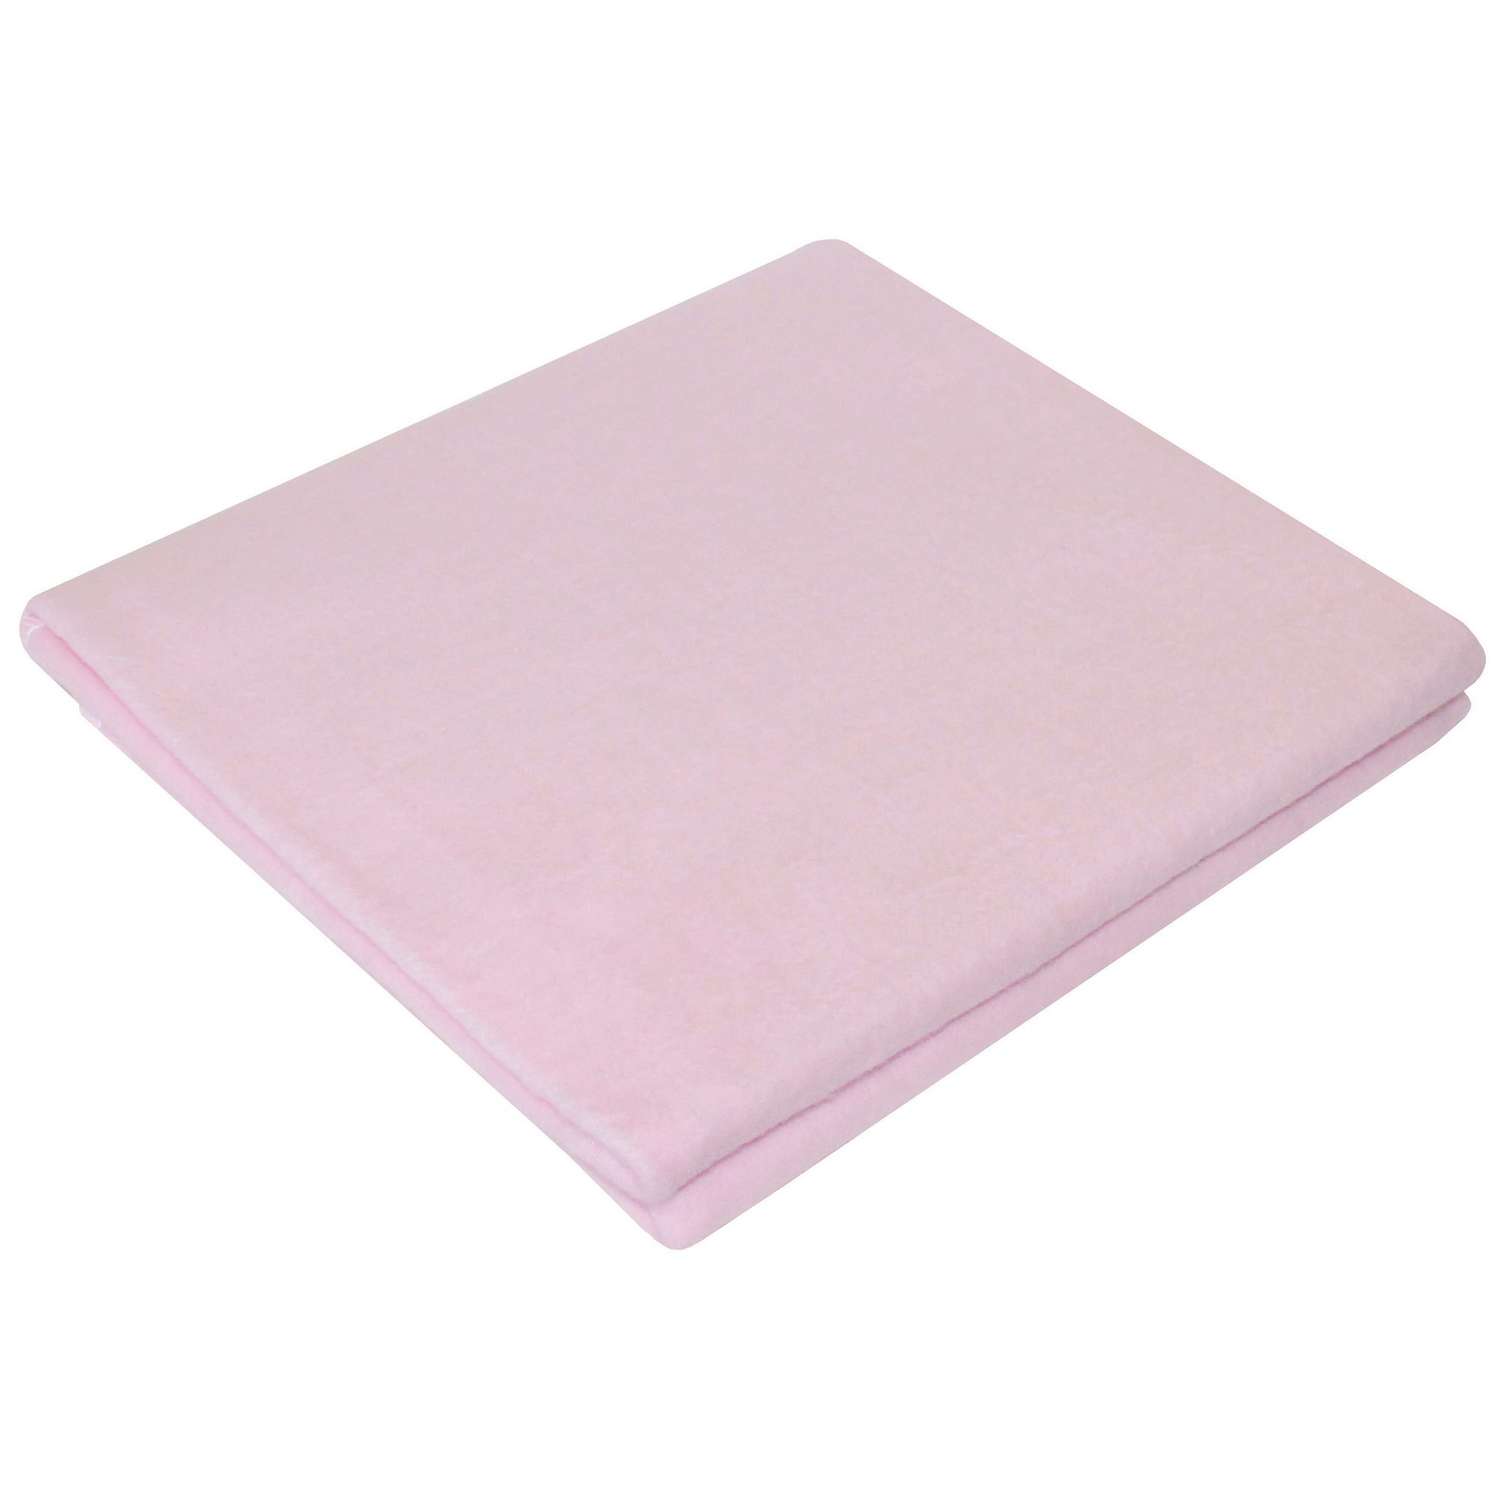 Одеяло байковое Ермошка Фламинго 57-8 ЕТЖ Премиум - фото 1